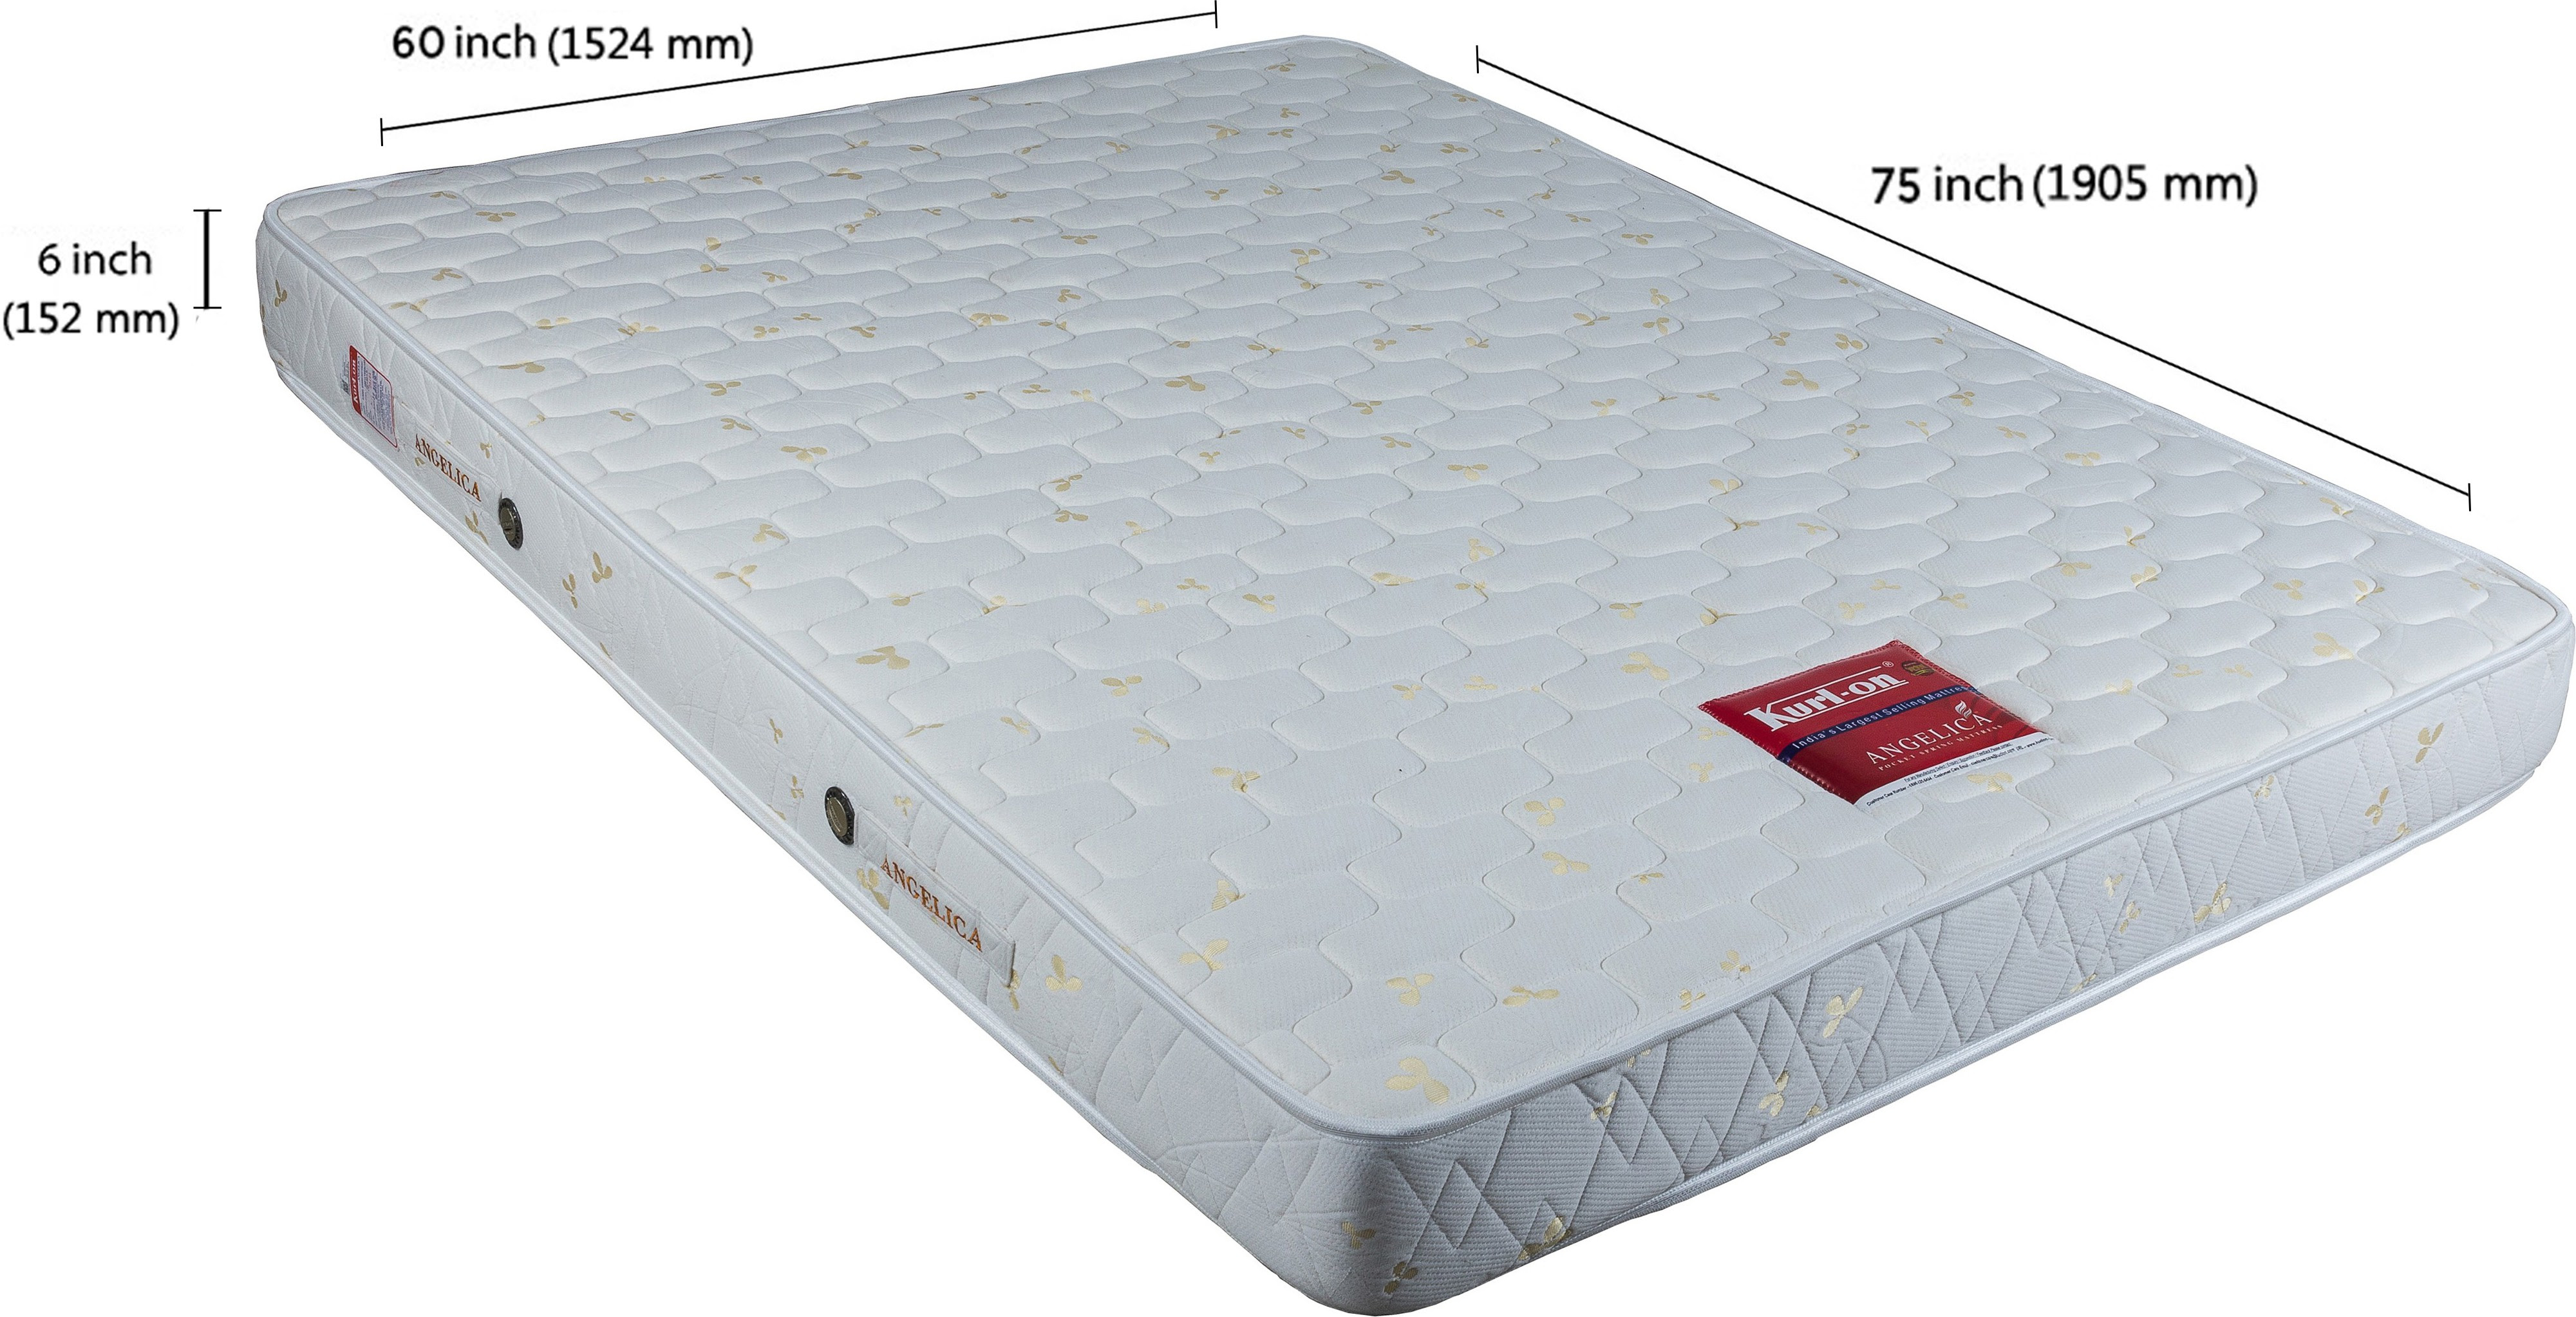 kurlon mattress sizes and prices in mumbai